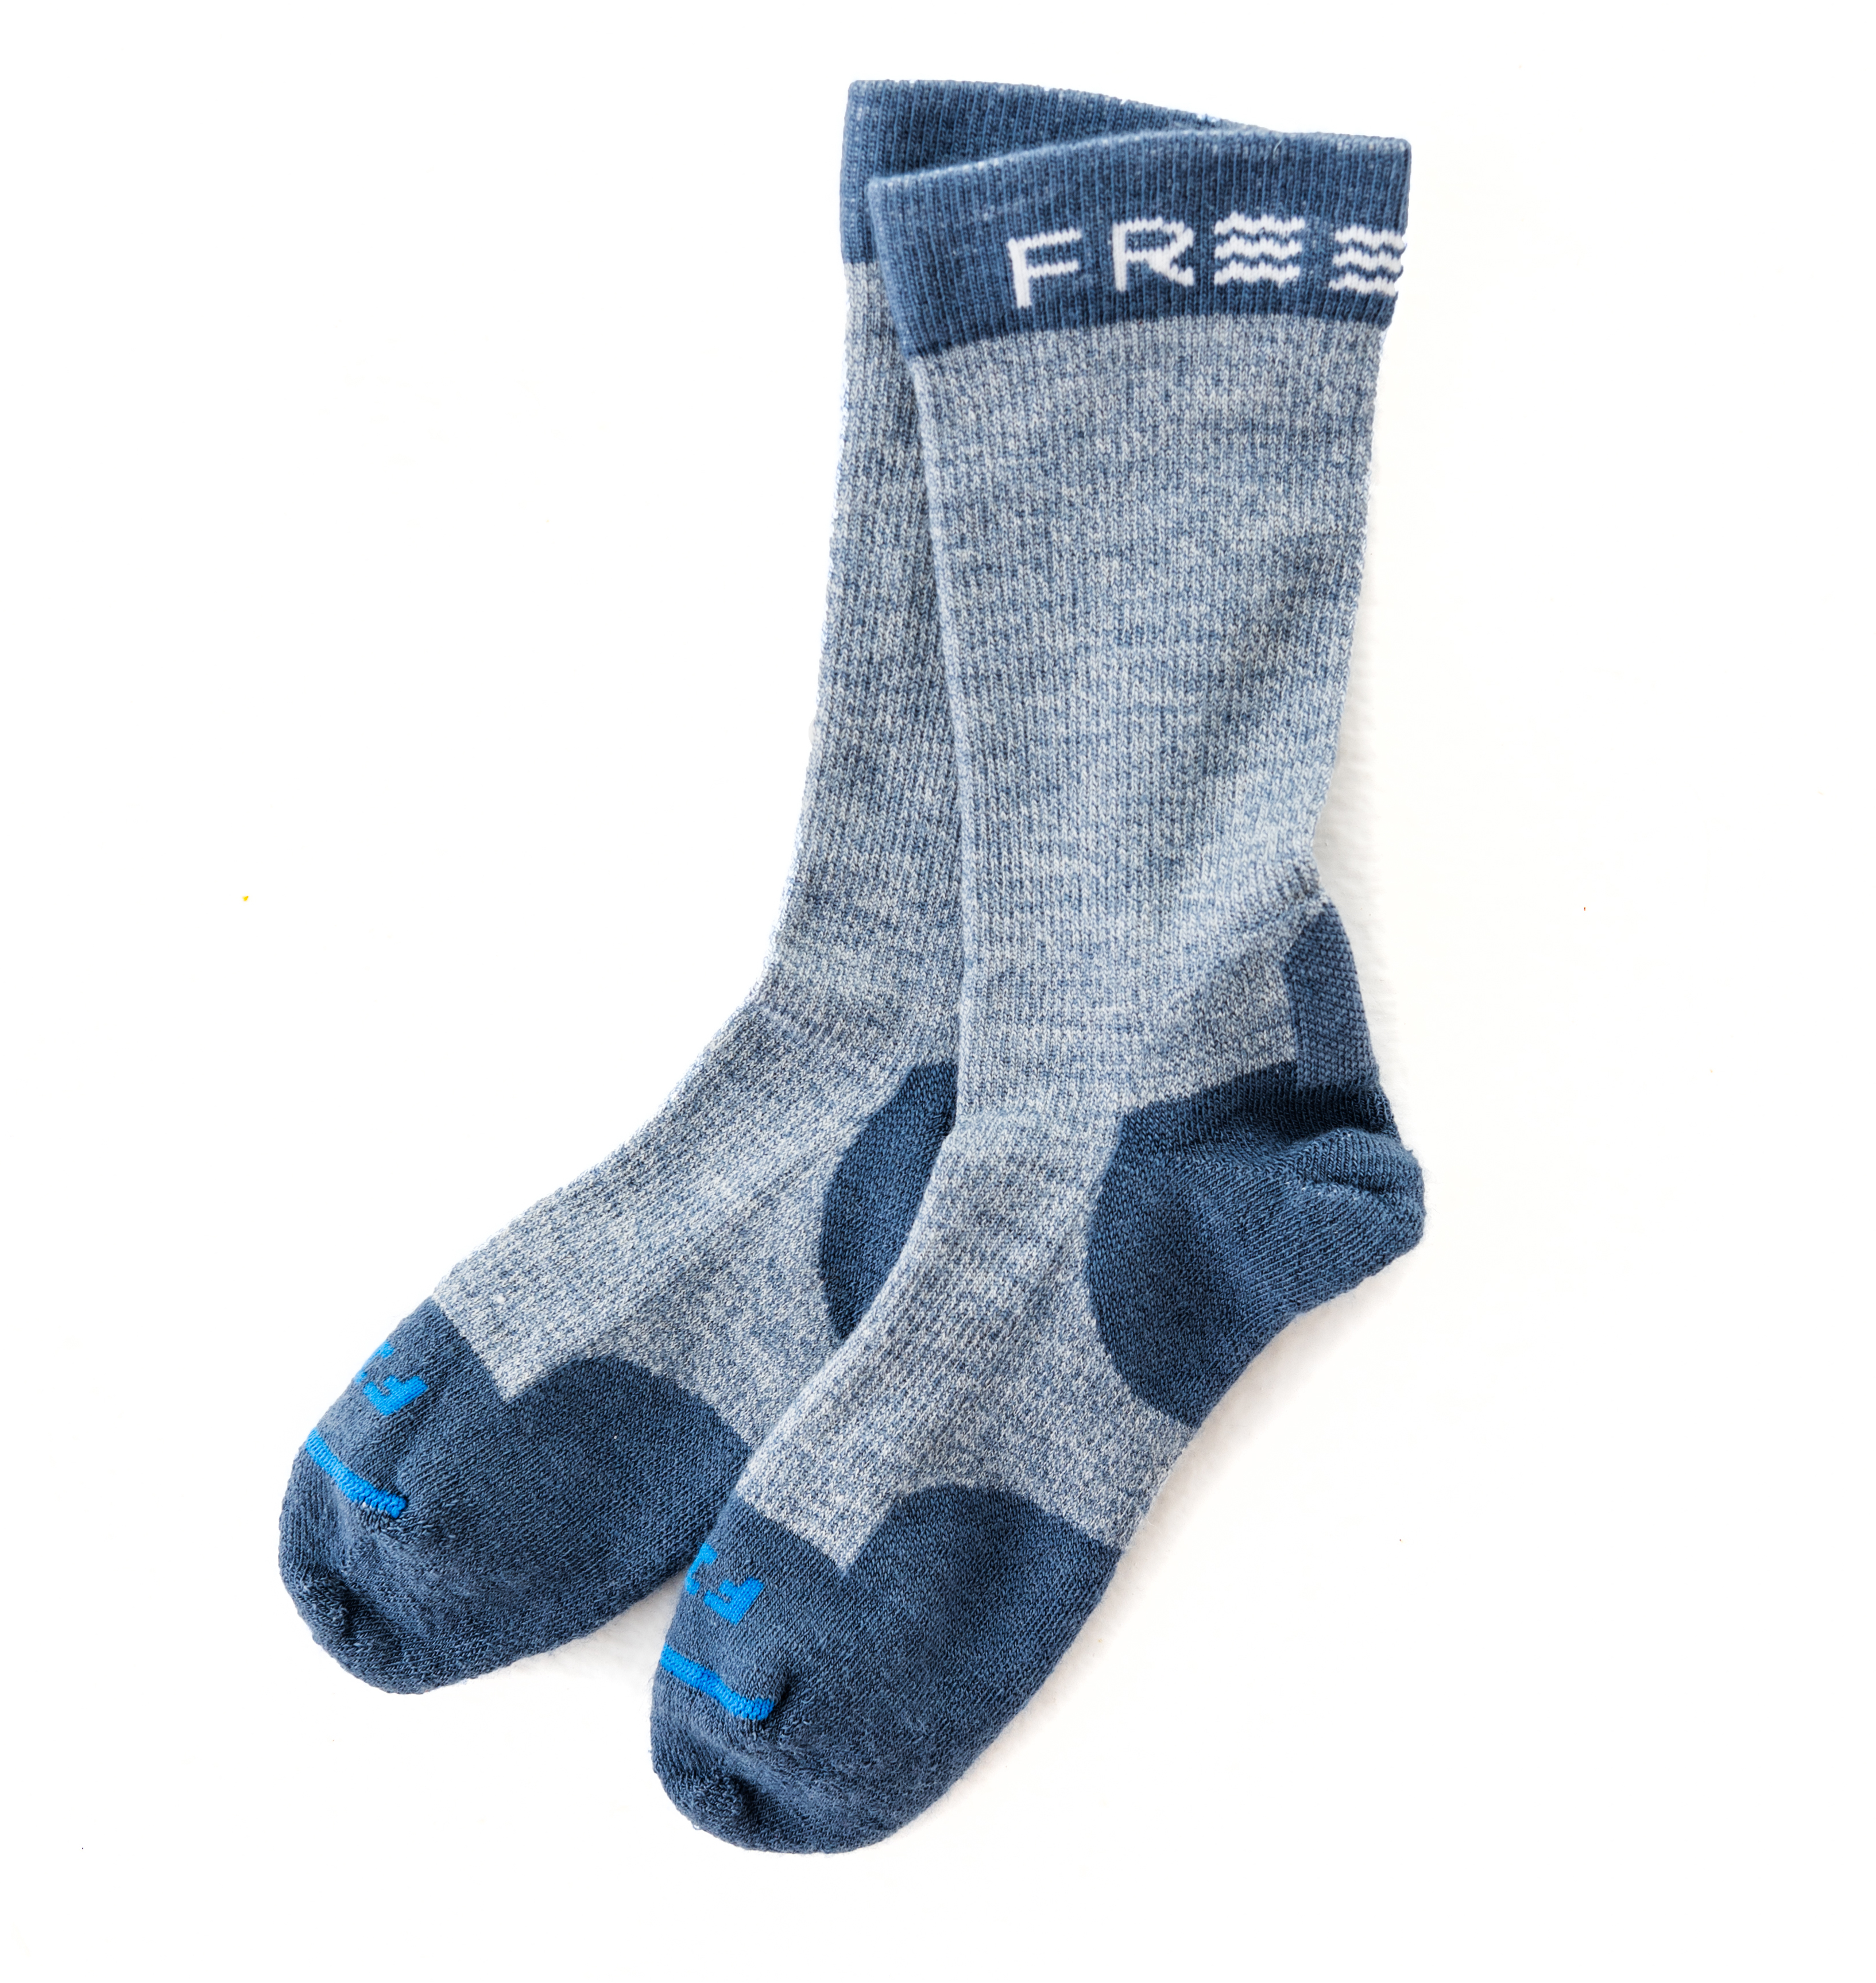 Free Fly Socks